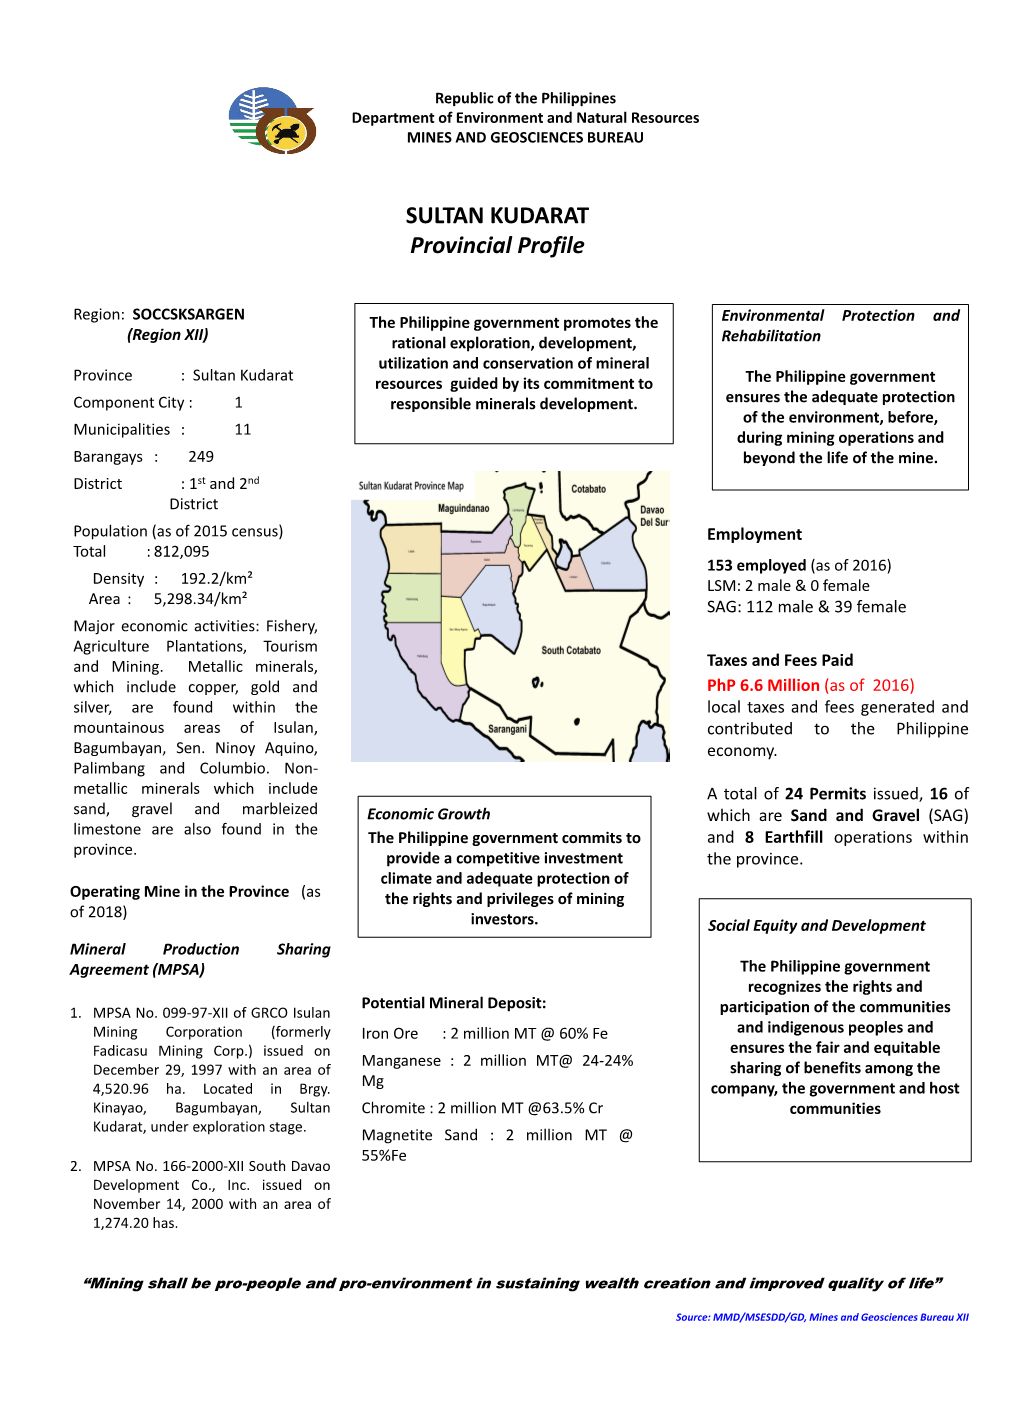 SULTAN KUDARAT Provincial Profile